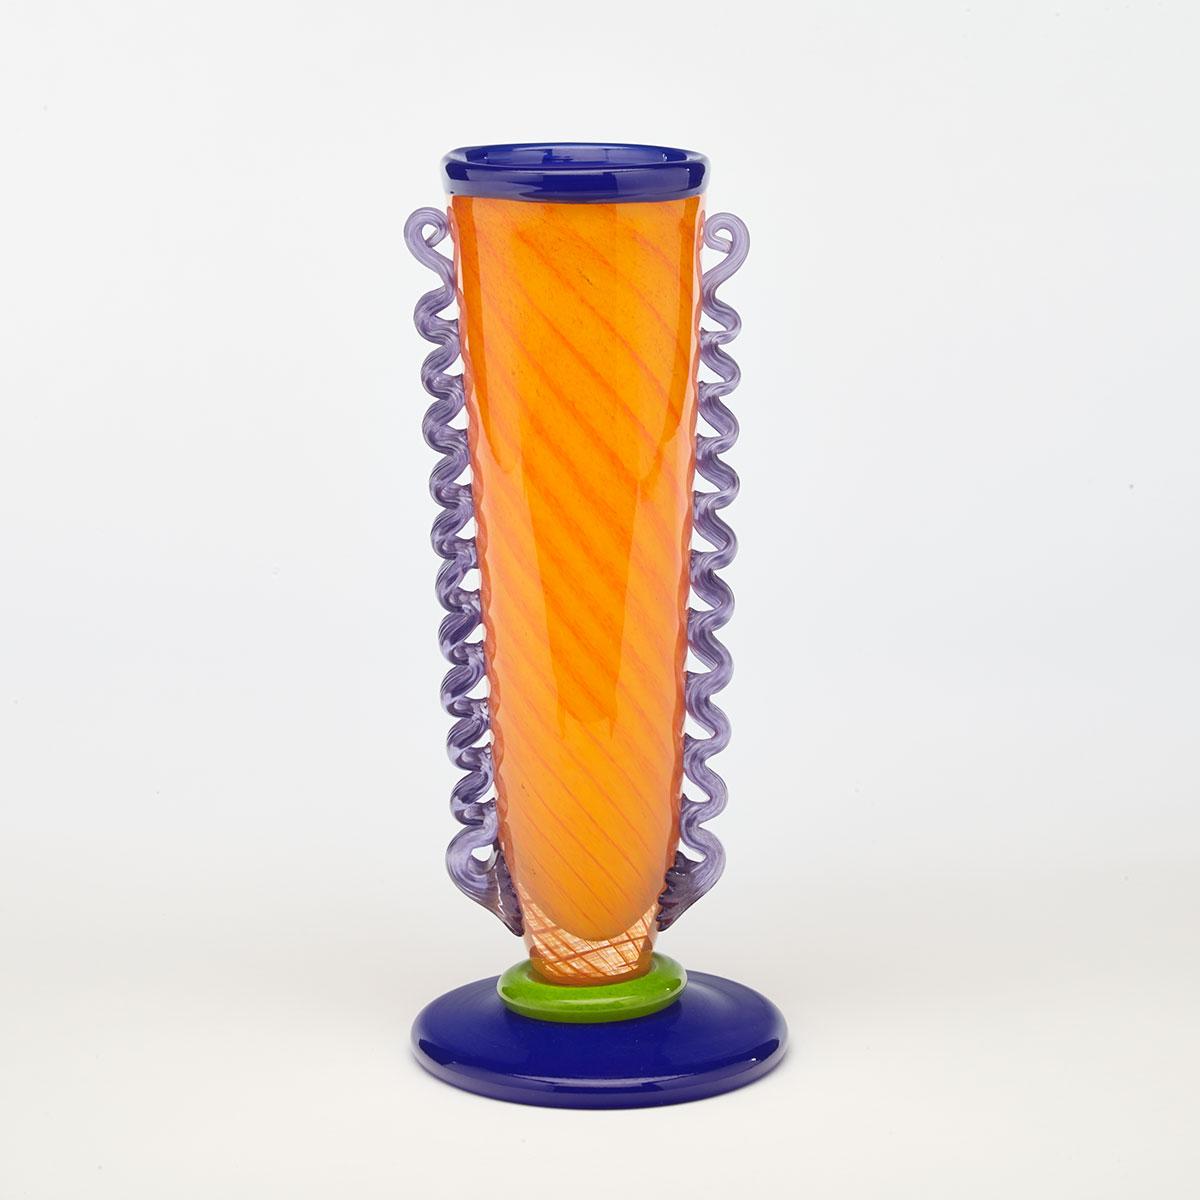 Paulus Tjiang (Canadian, b.1964), Glass Vase, c.2000